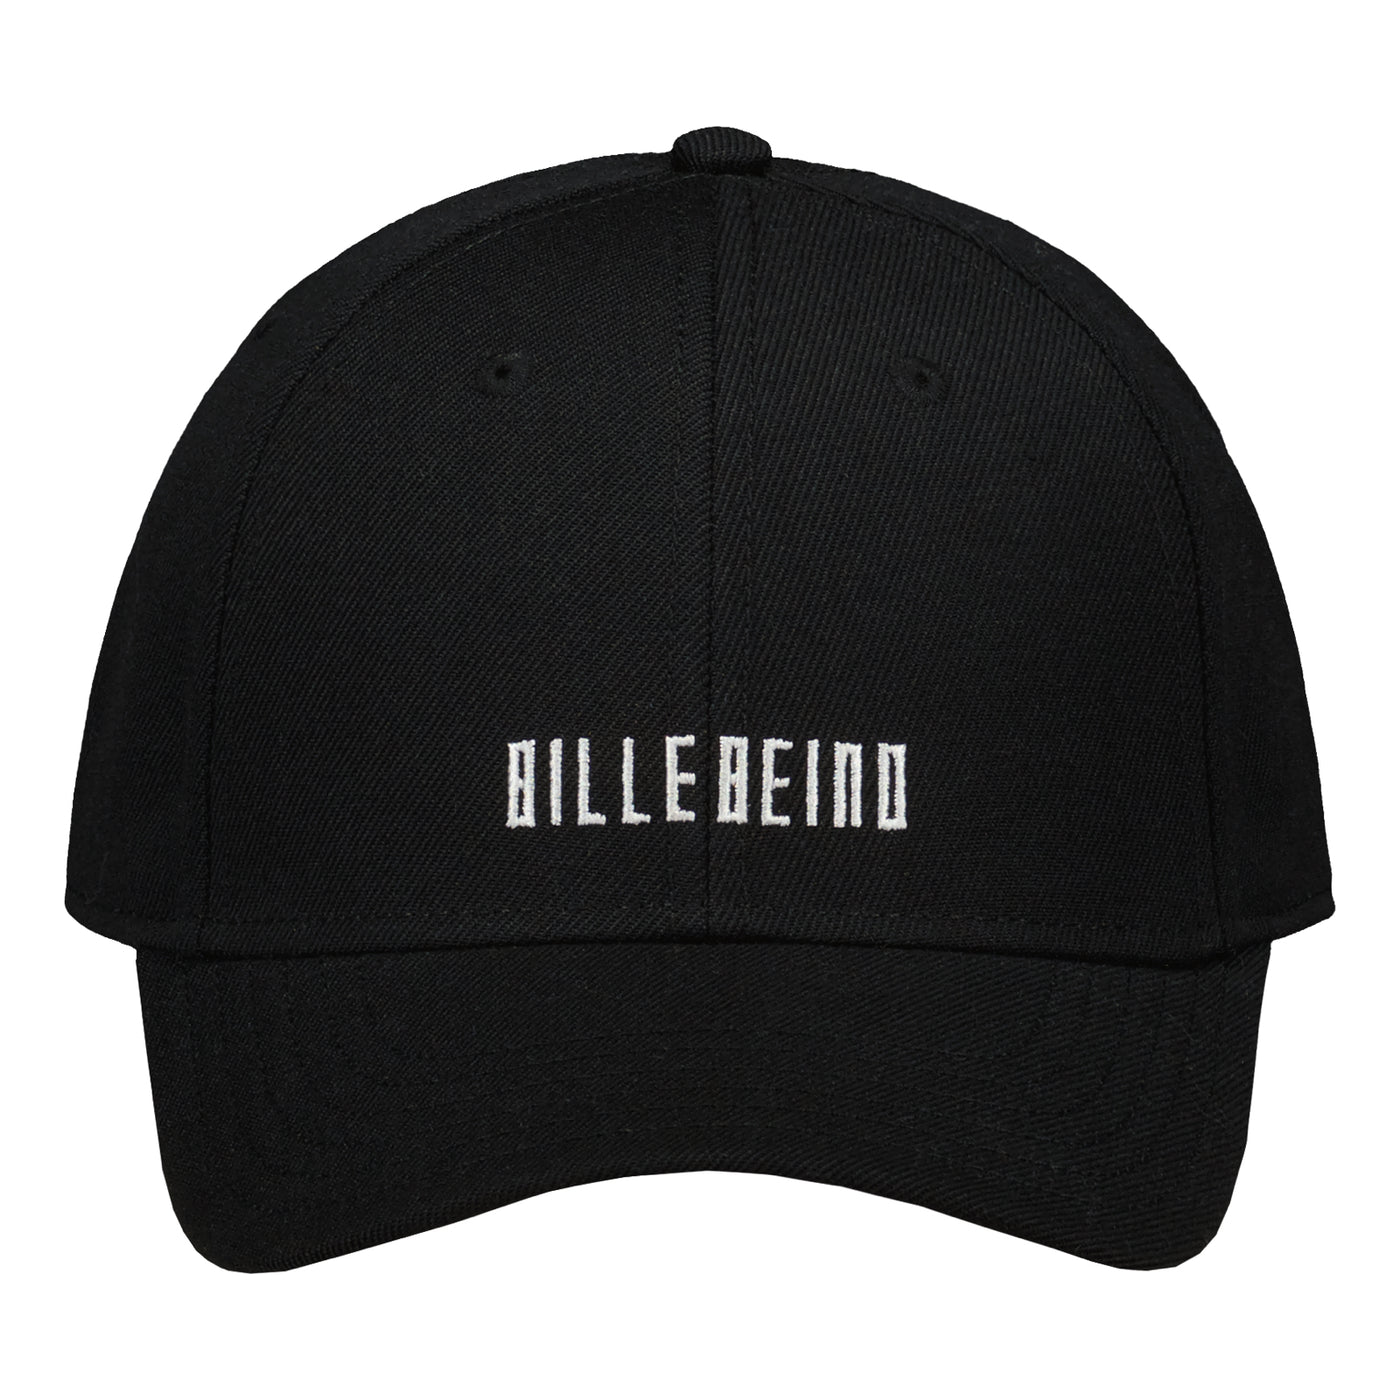 BILLEBEINO BASEBALL CAP Black Billebeino